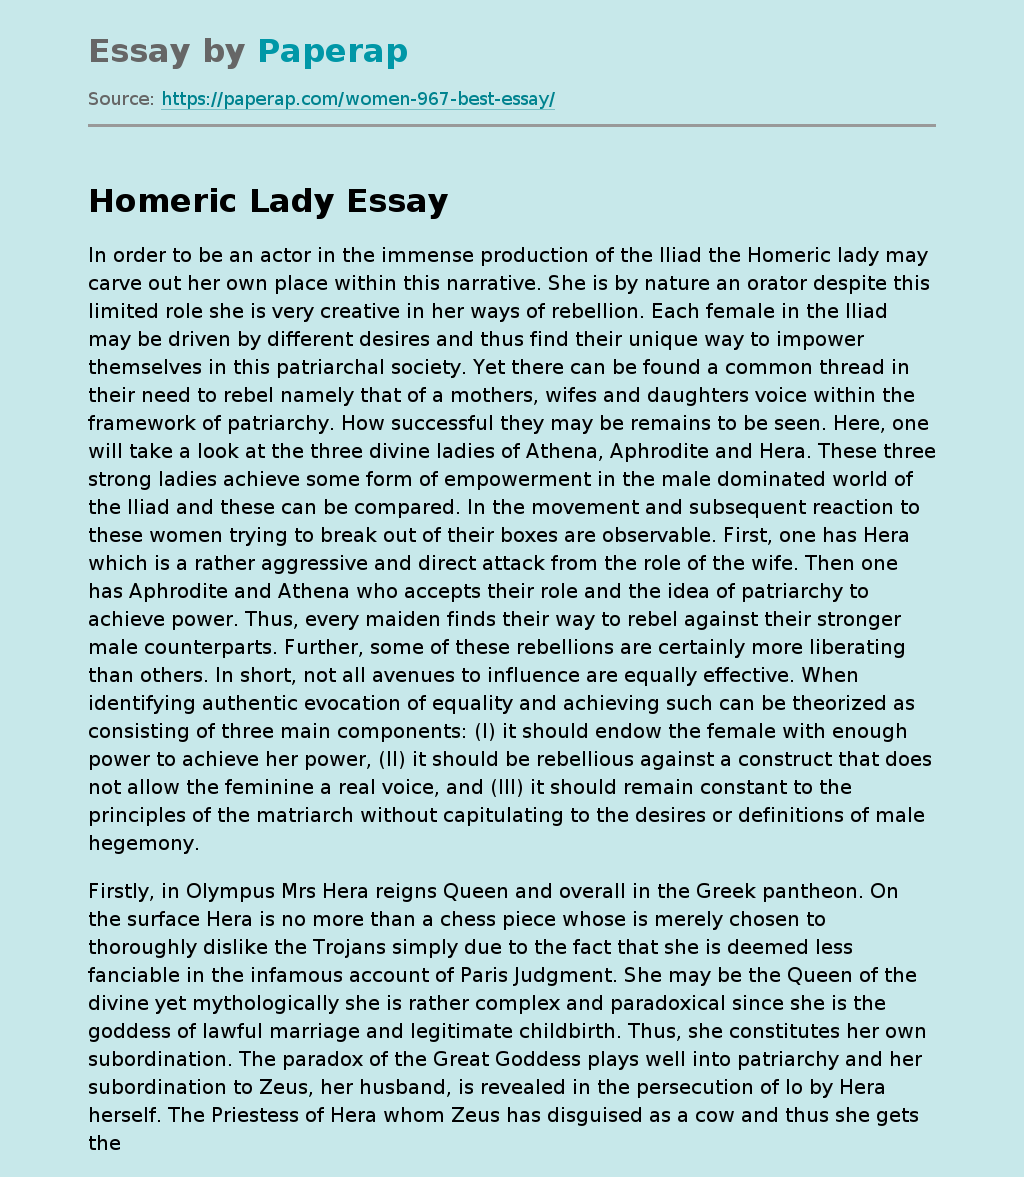 Homeric Lady and Modern Women